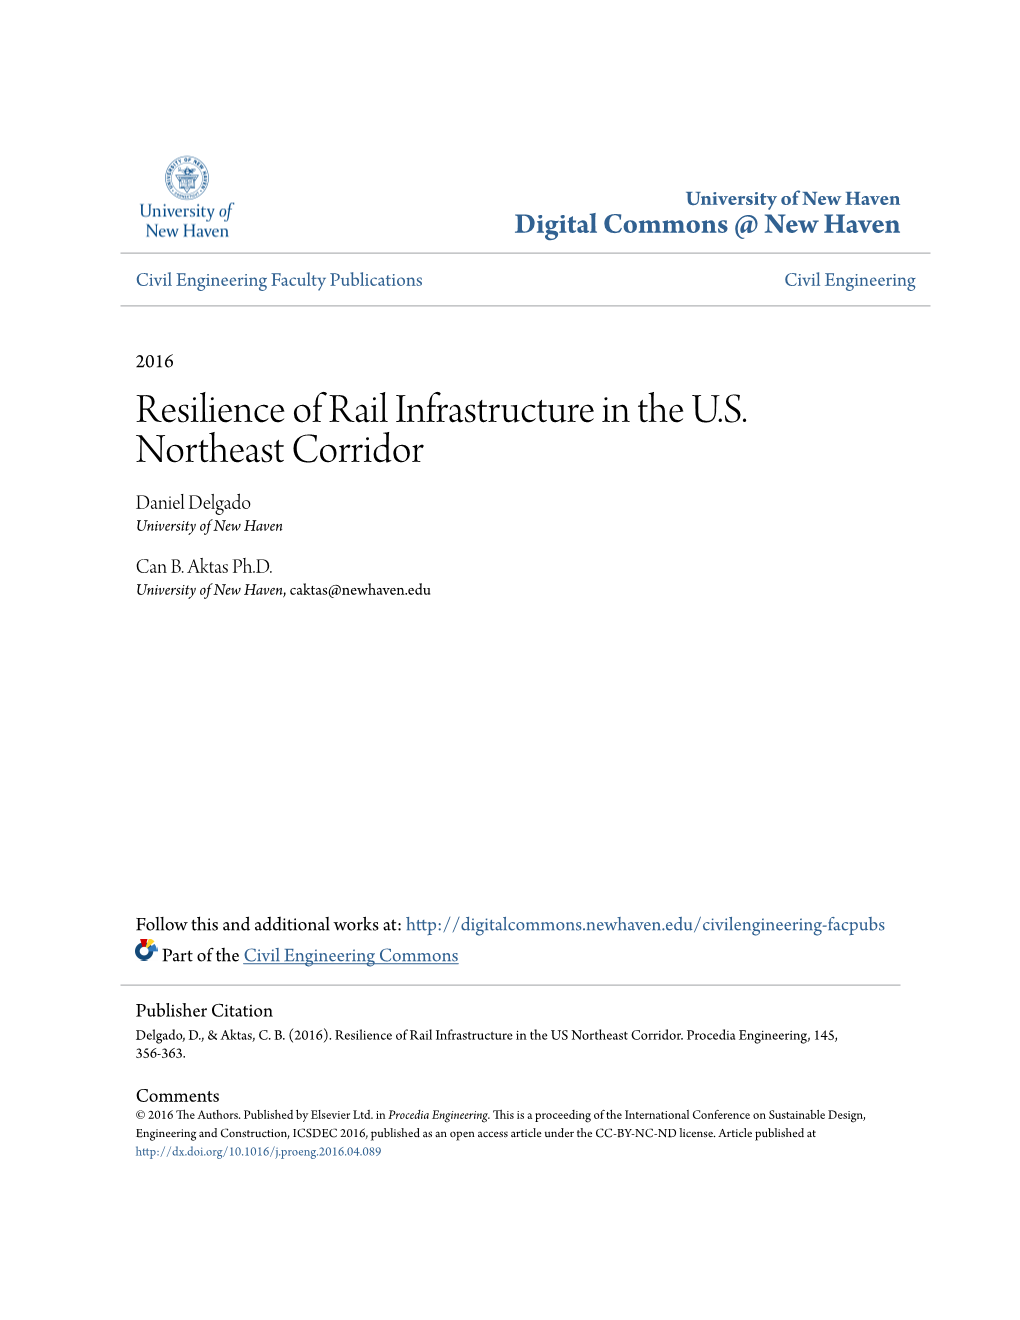 Resilience of Rail Infrastructure in the U.S. Northeast Corridor Daniel Delgado University of New Haven